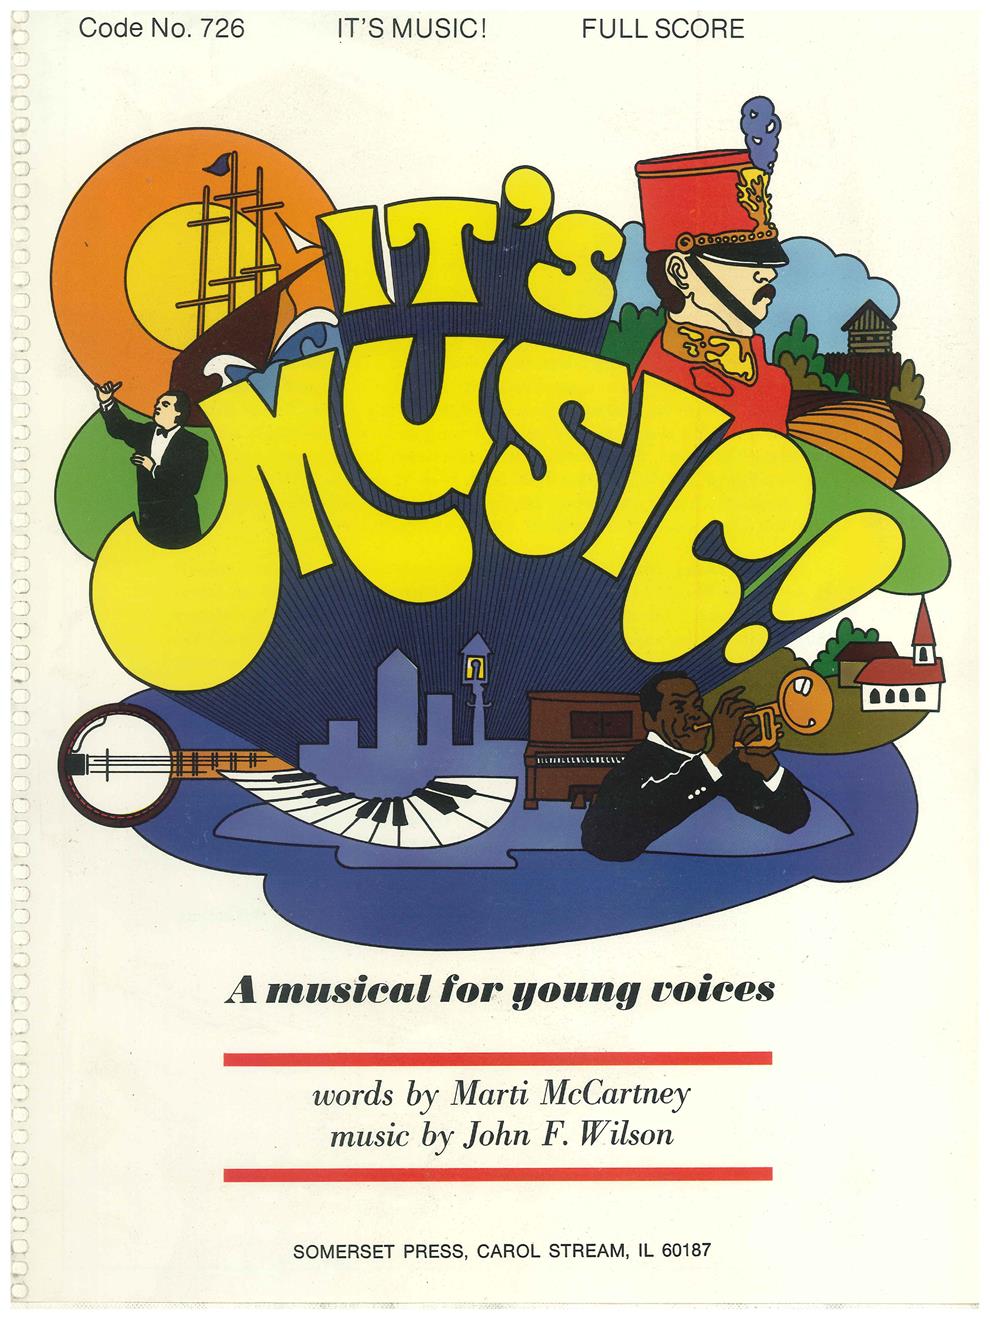 It's Music - Full Score Cover Image